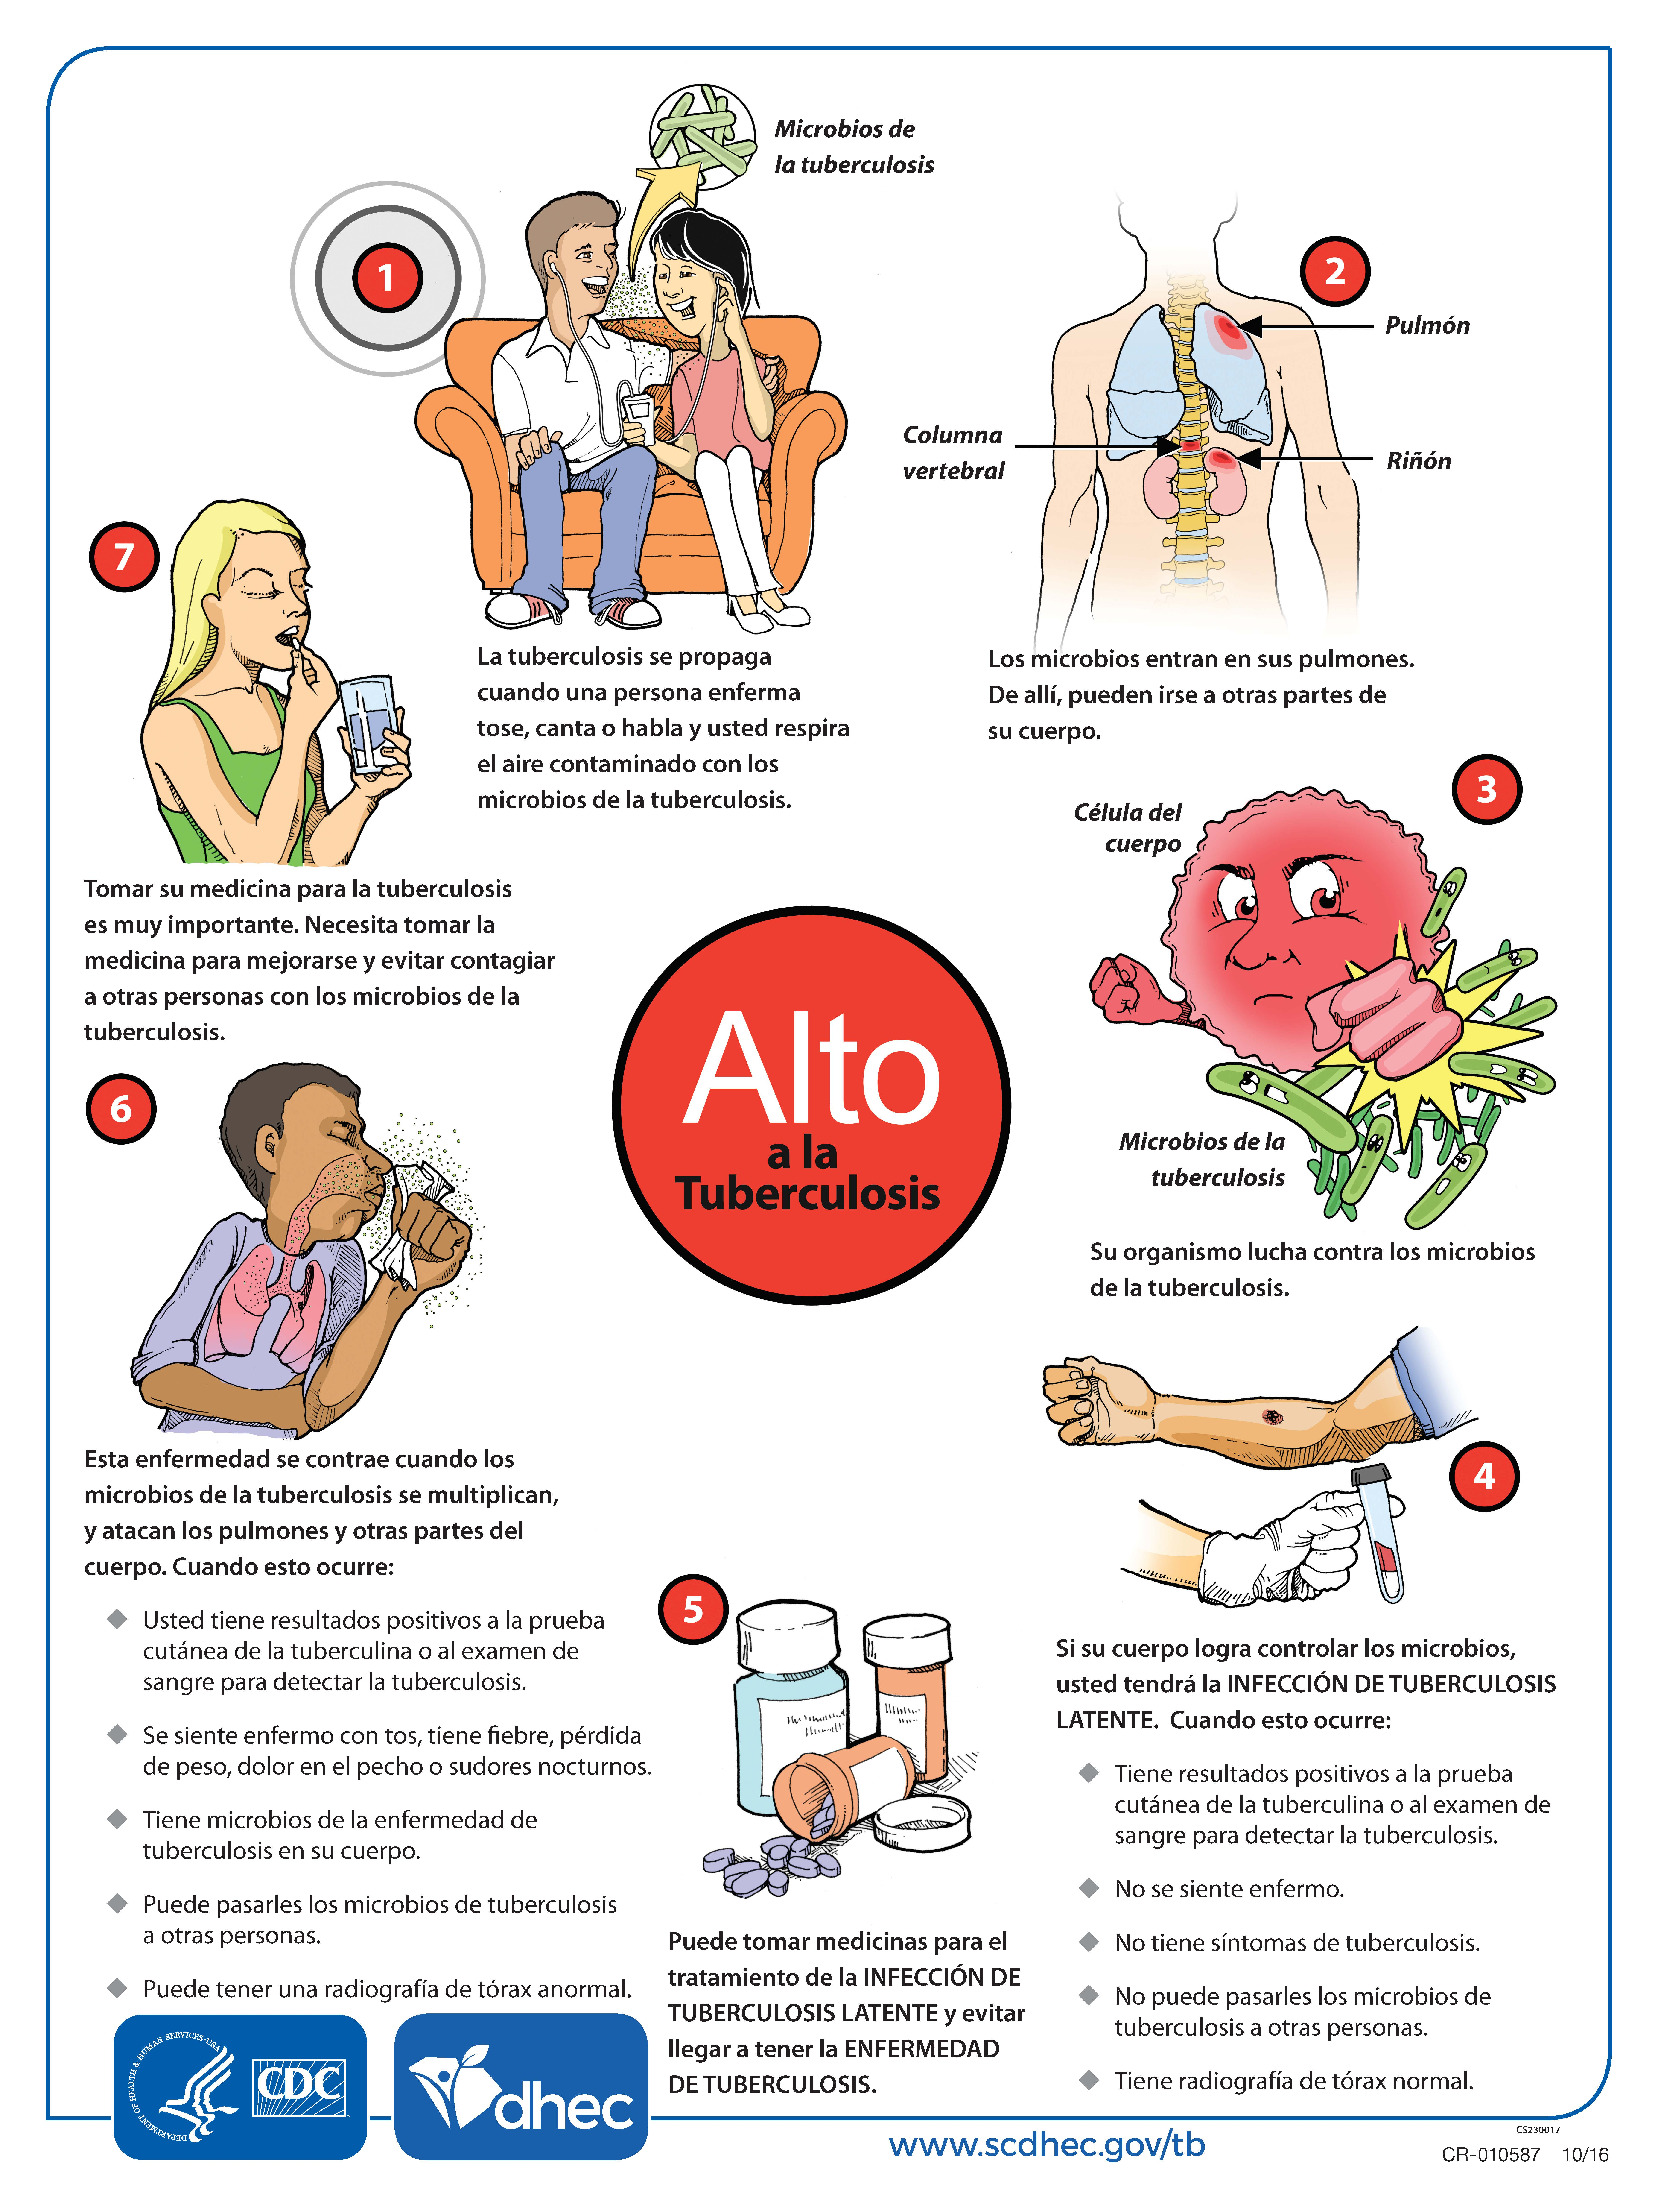 Stop TB (Spanish) pdf image